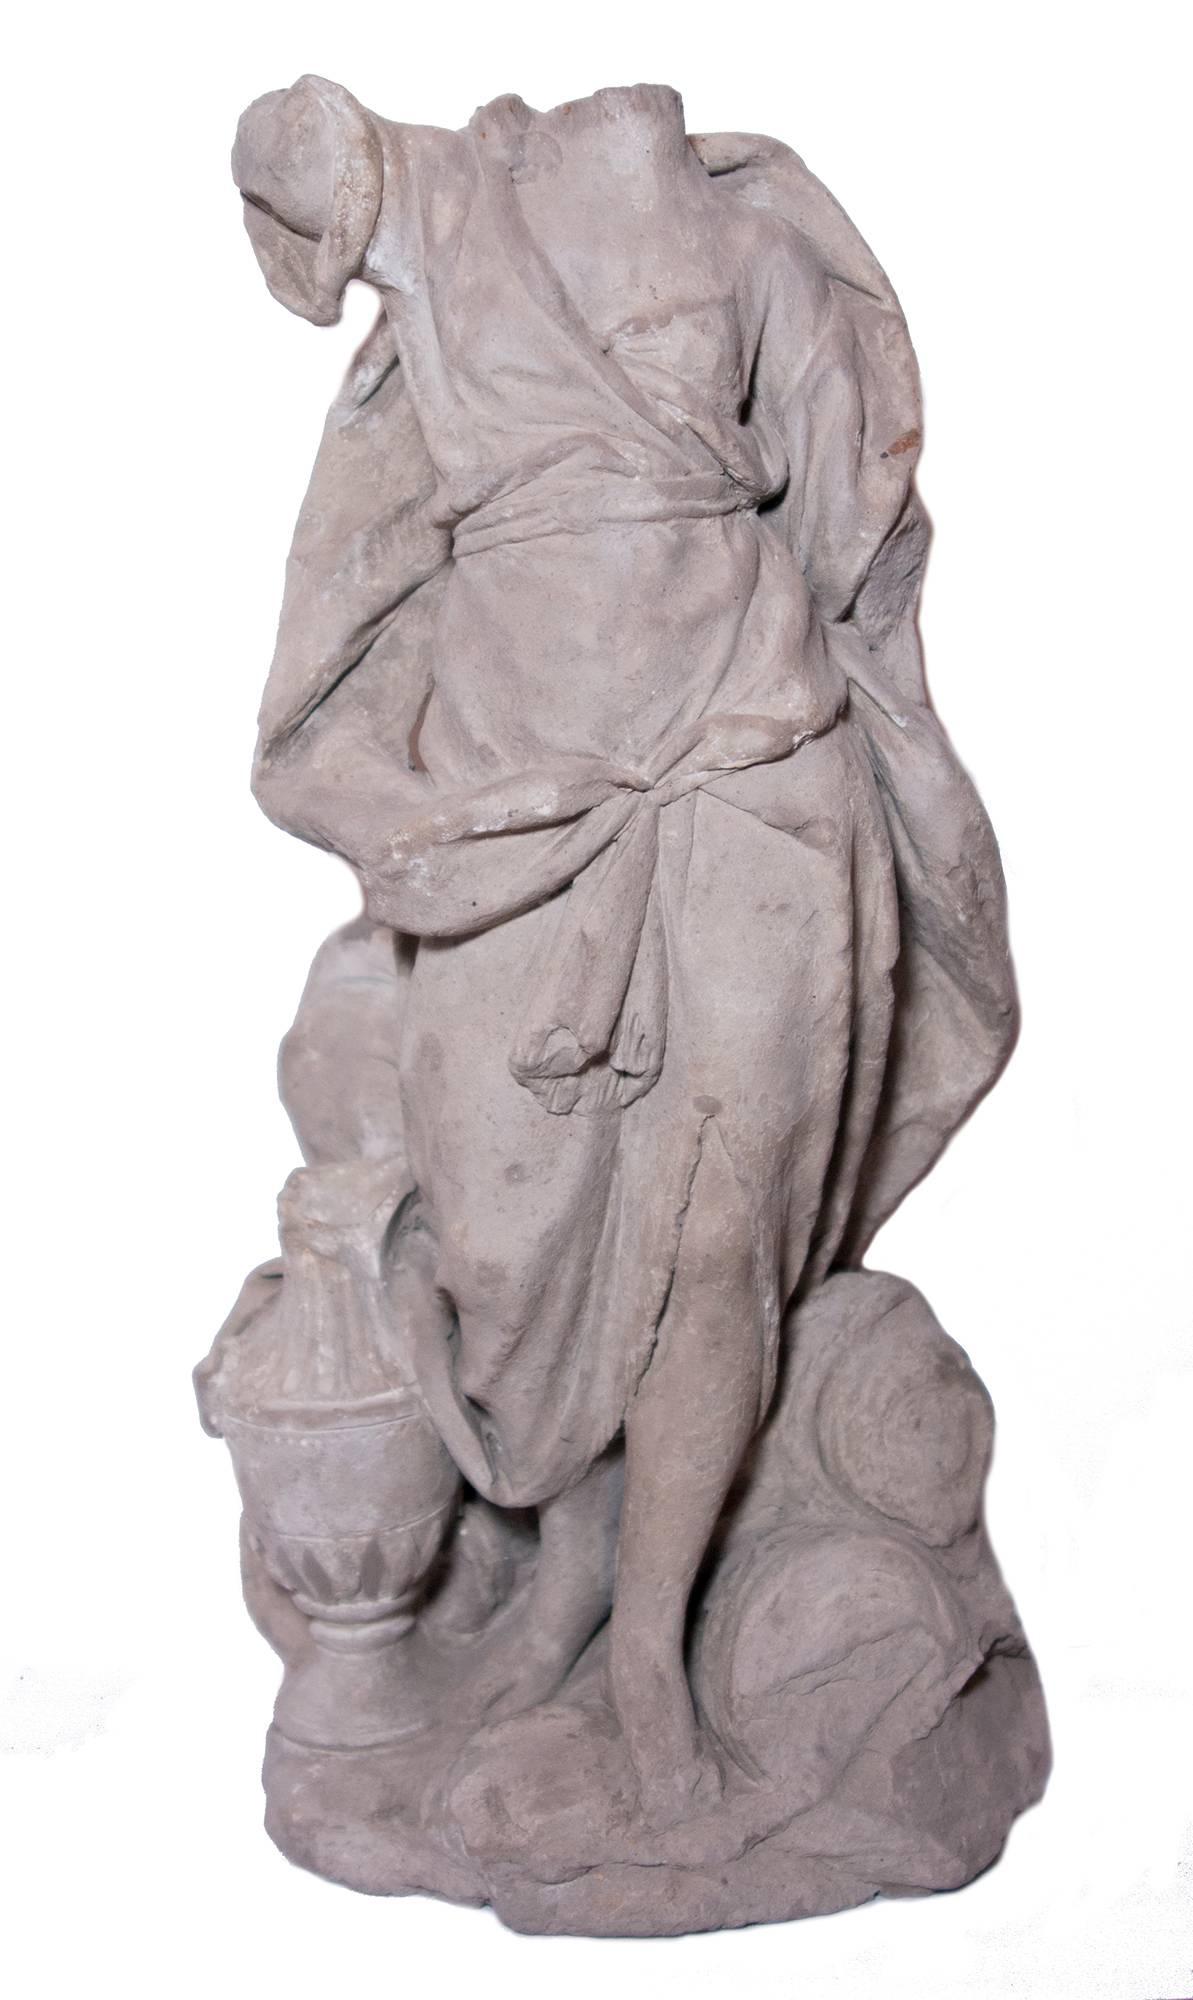 Unknown Figurative Sculpture - Bozzetto of an allegory in terracotta, France circa 1700